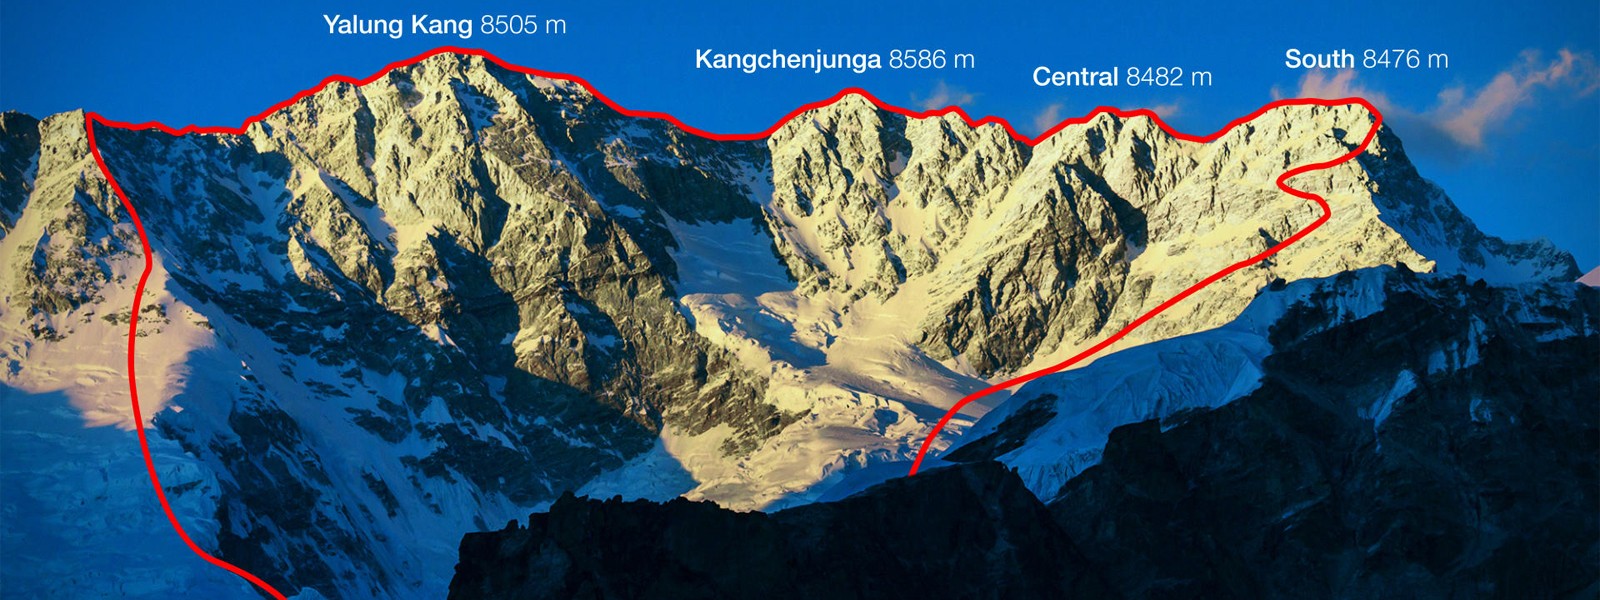 Mount Kanchenjunga Expedition 